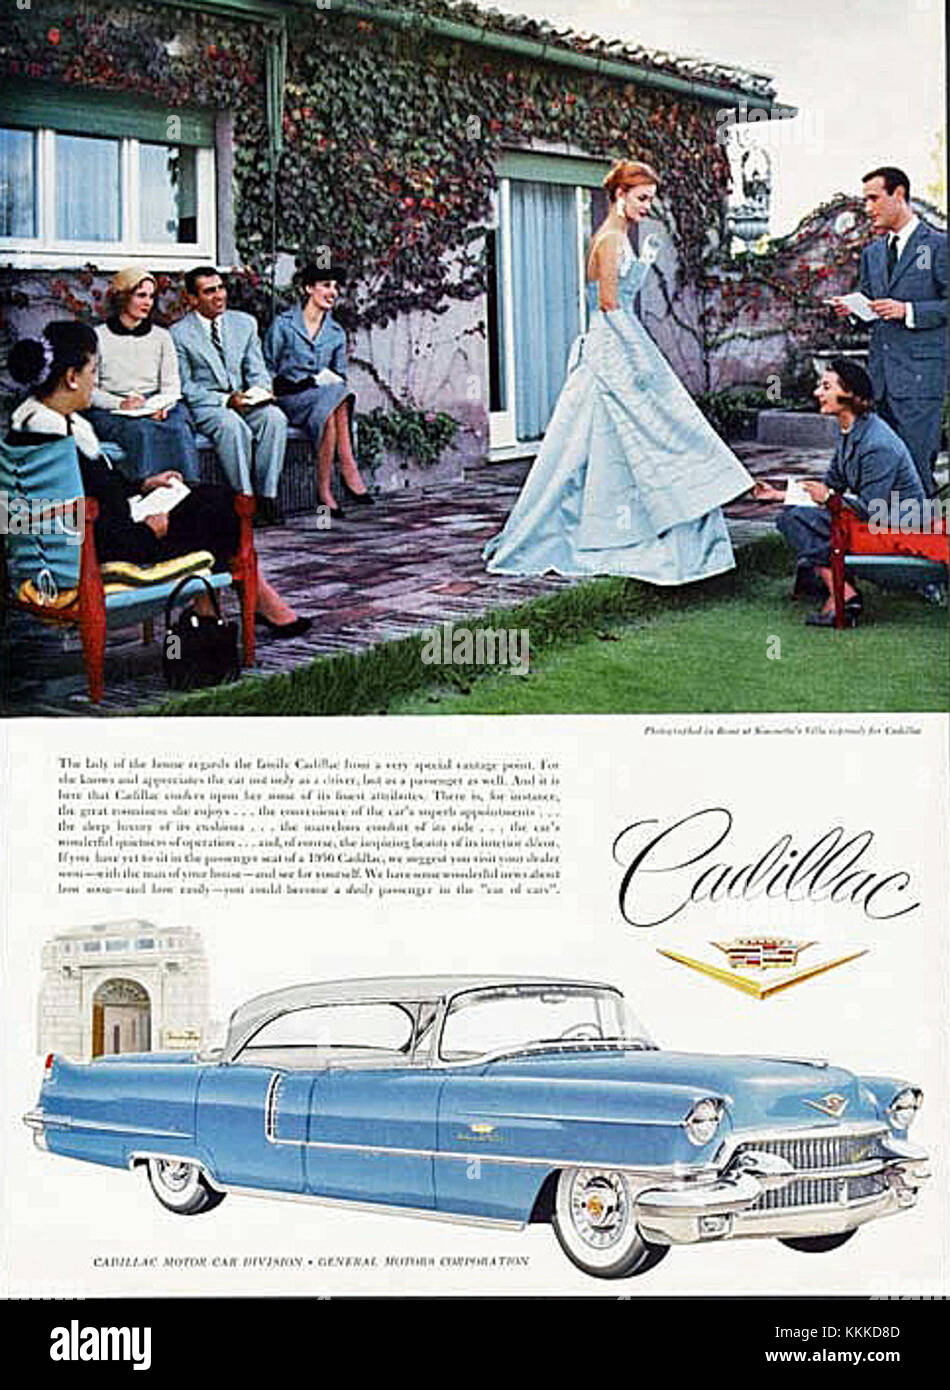 1956 Cadillac Sedan Deville ad Stock Photo